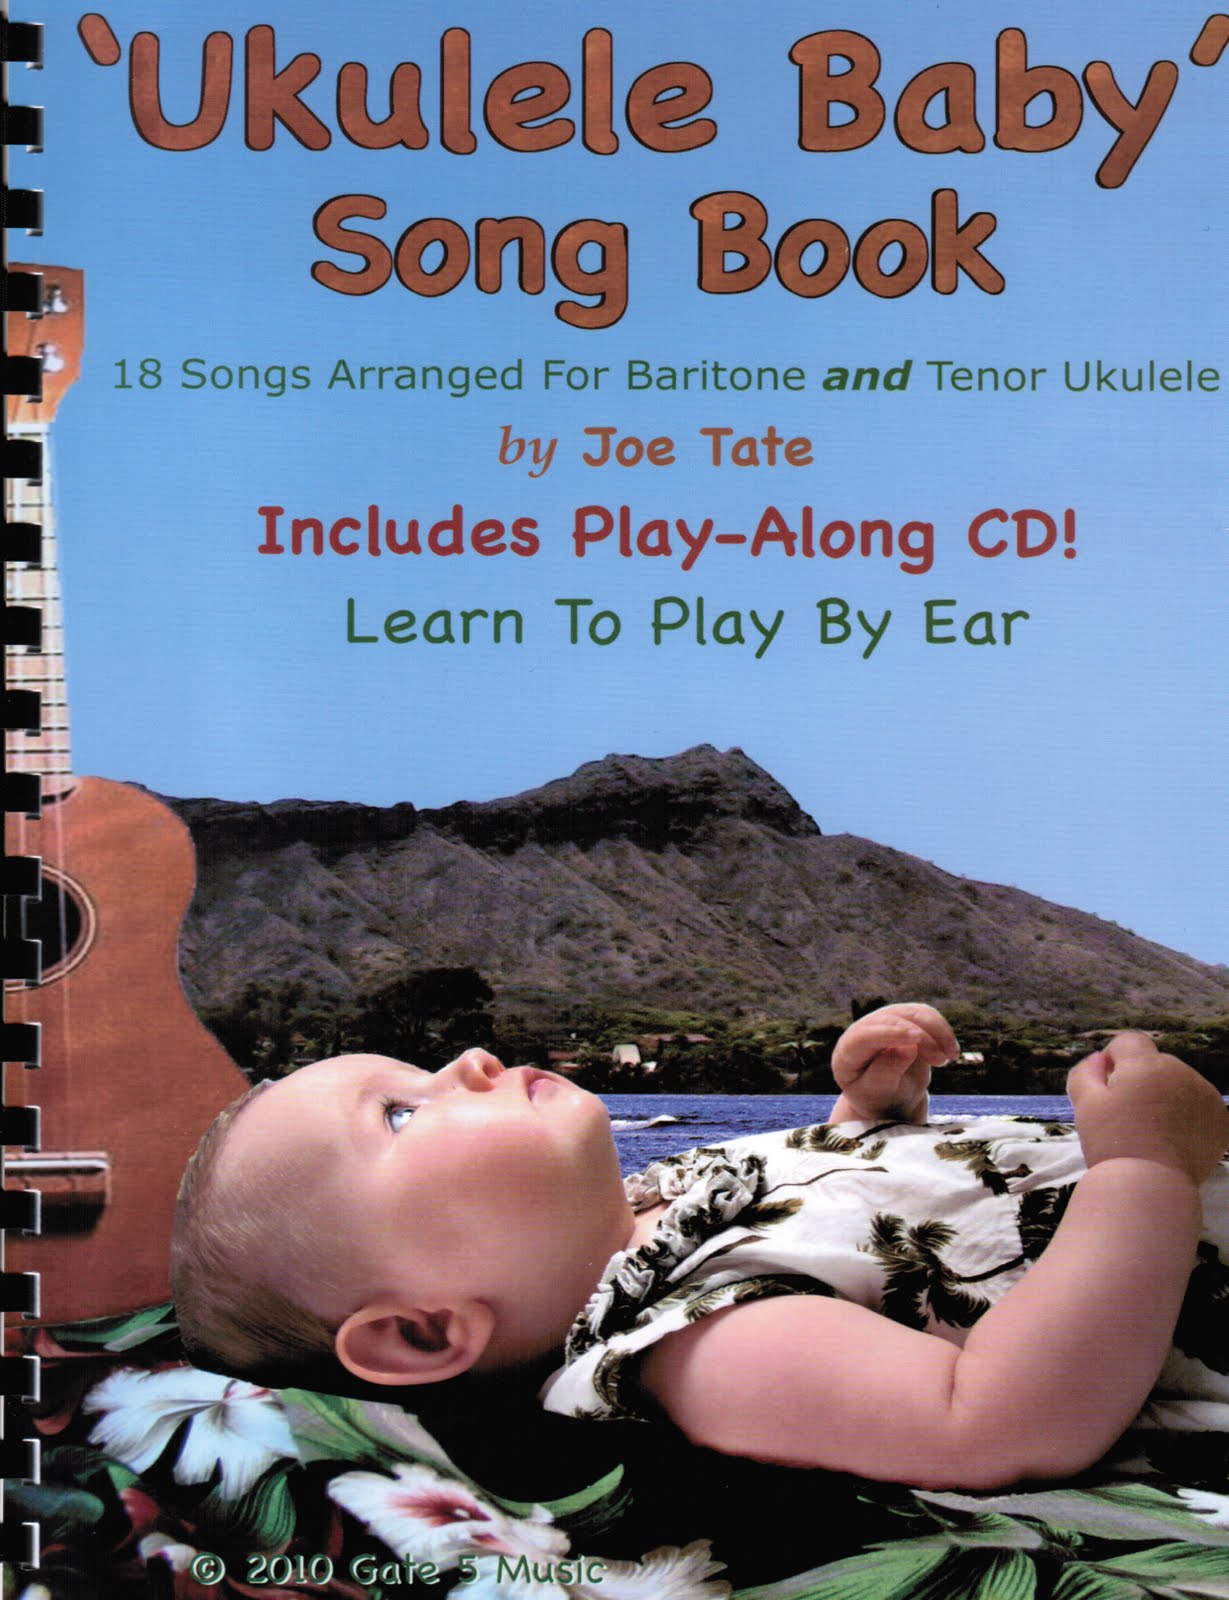 Humble Baritonics Joe Tate Ukulele Baby Song Book